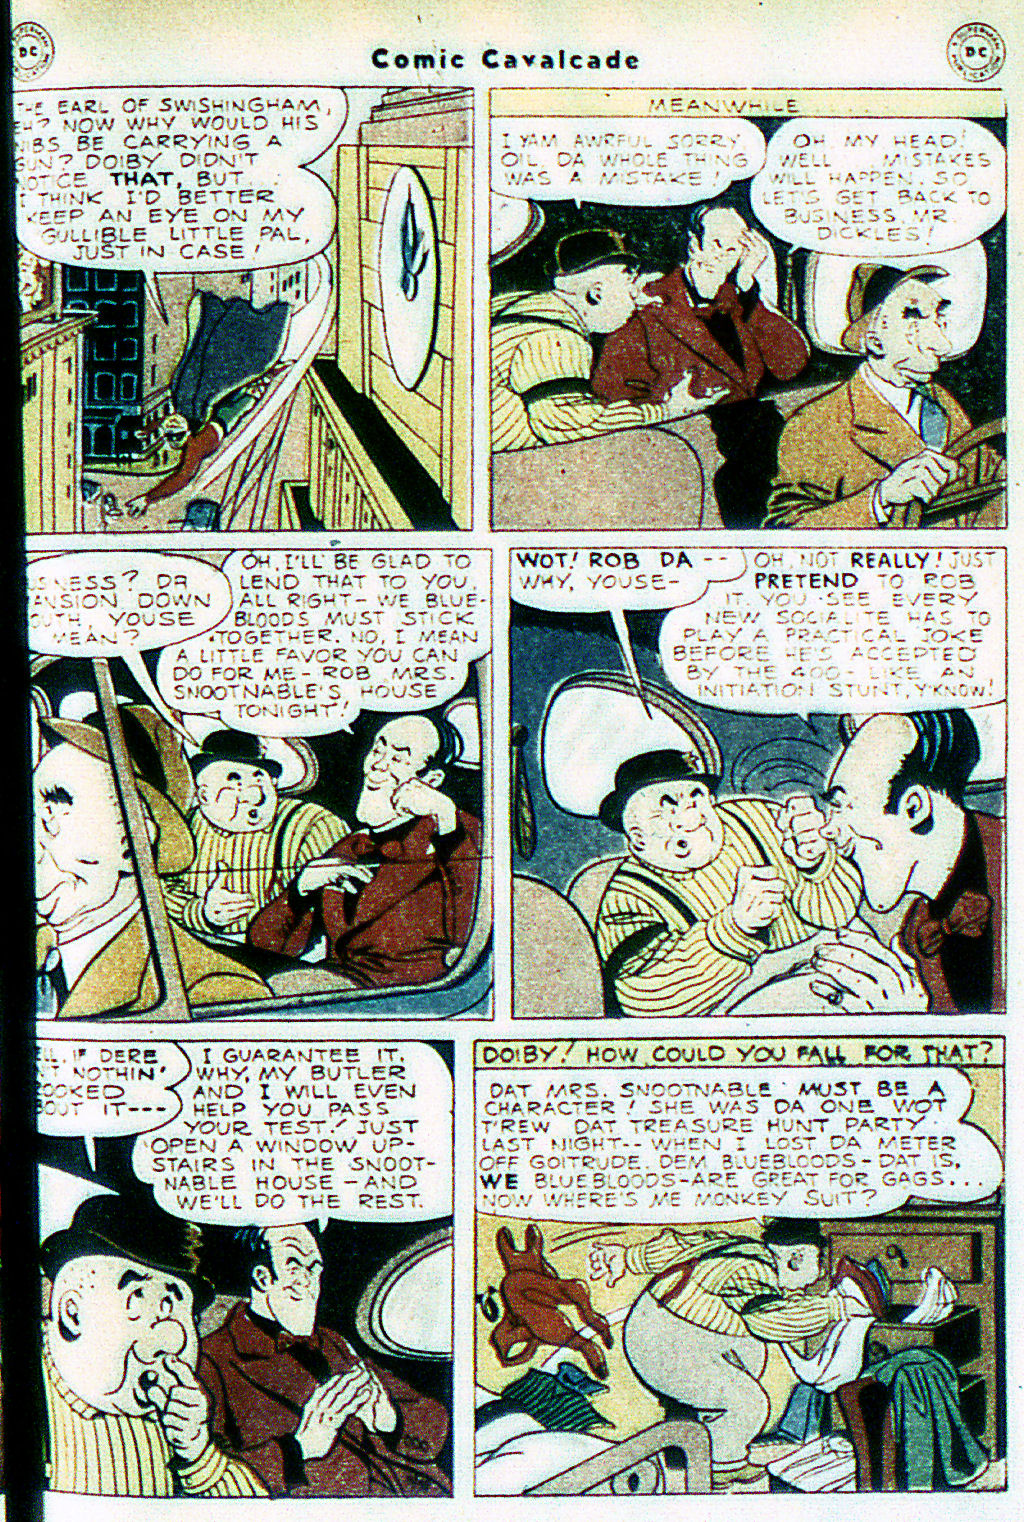 Comic Cavalcade issue 17 - Page 66